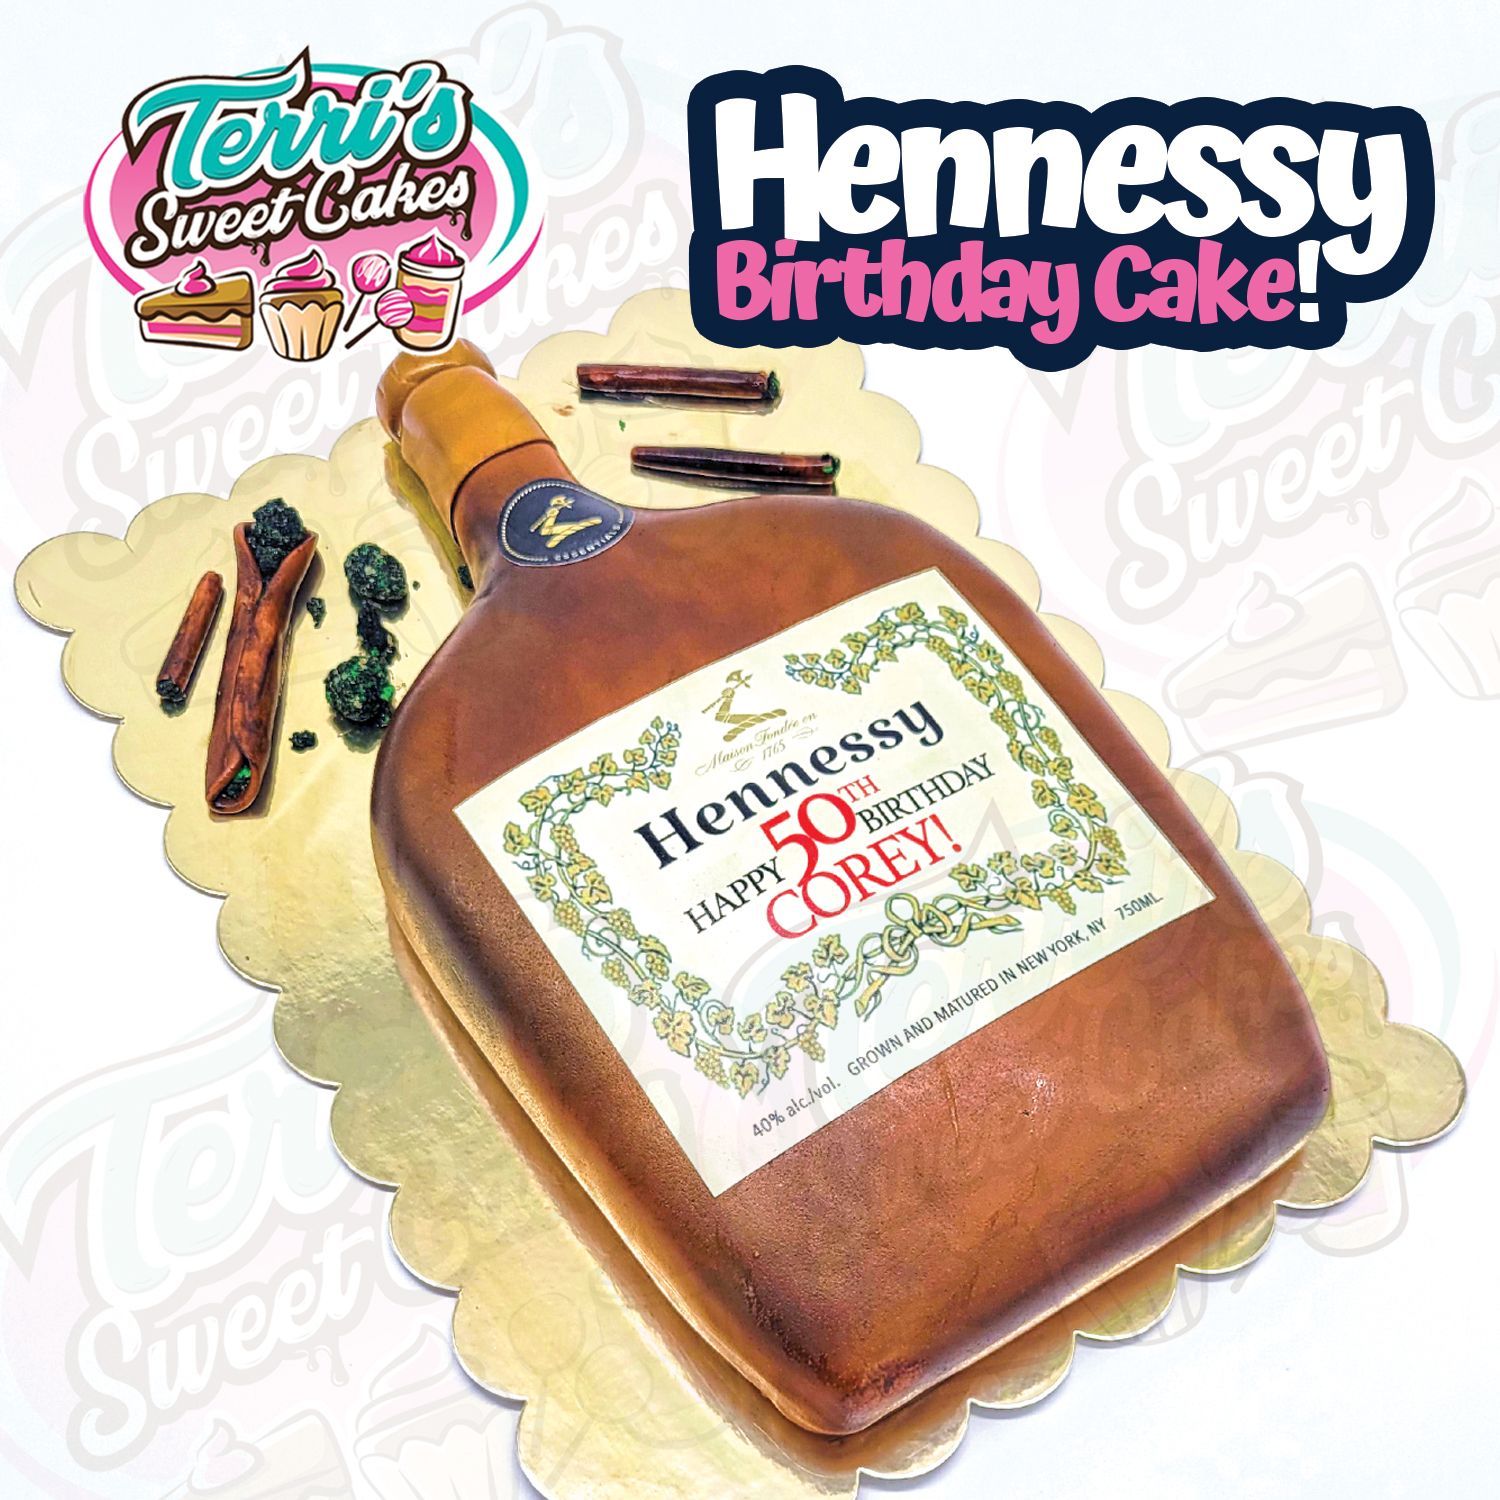 Hennessy Birthday Cake by Terri's Sweet Cakes!